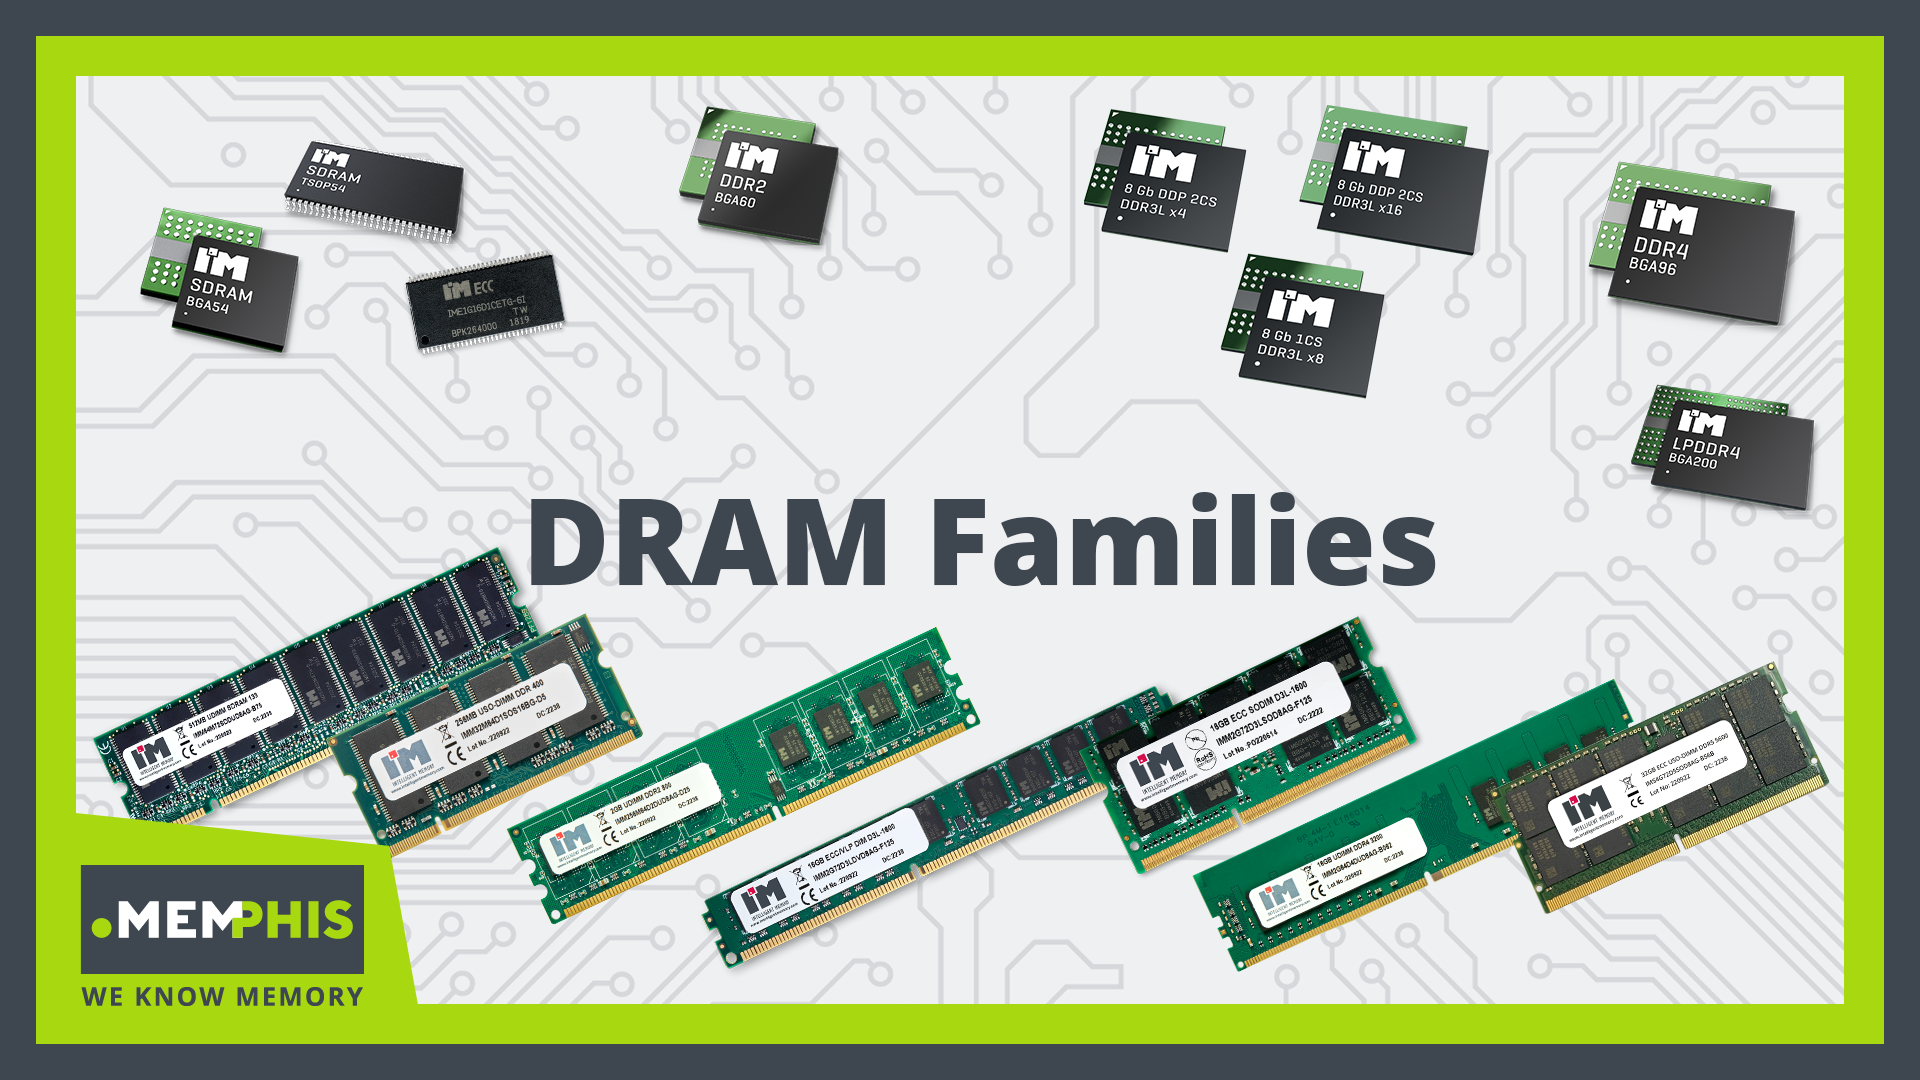 Intelligent Memory has an extensive range of DRAM families